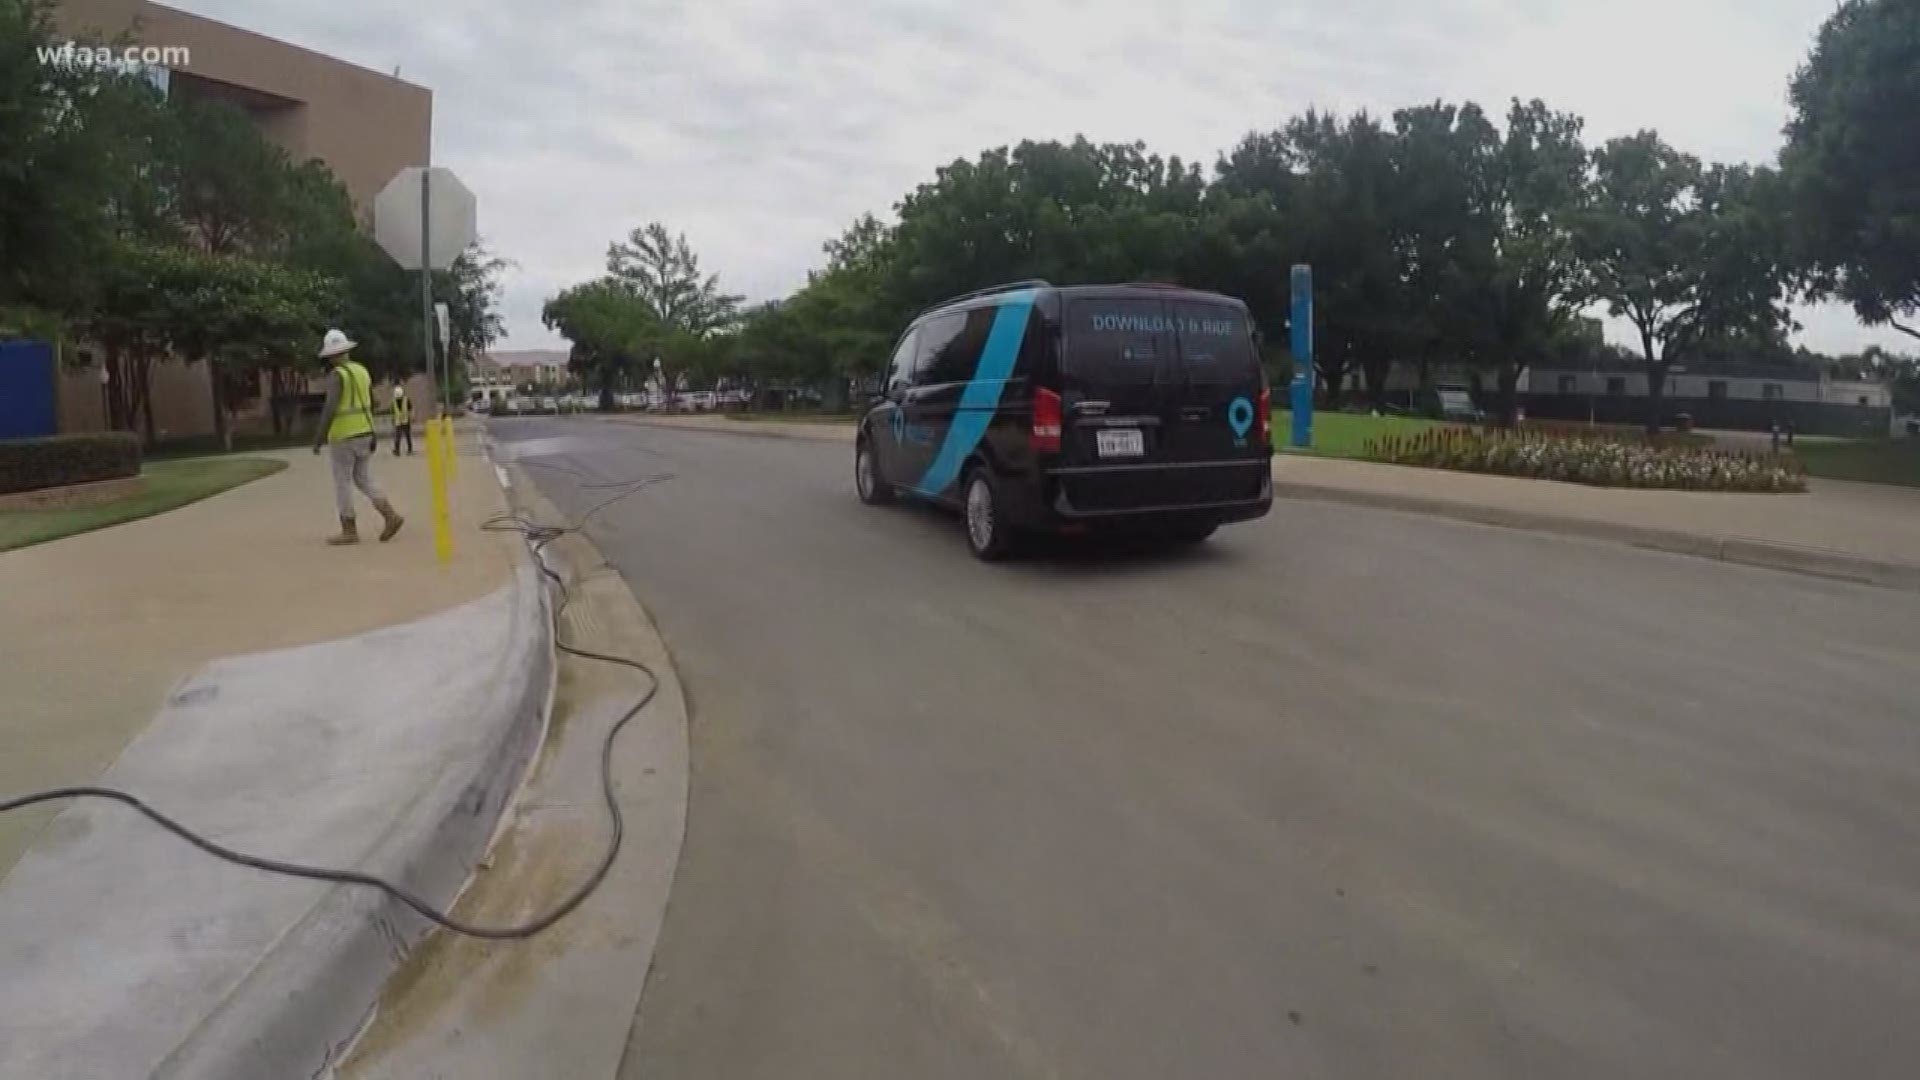 Driverless cars arrive in Arlington